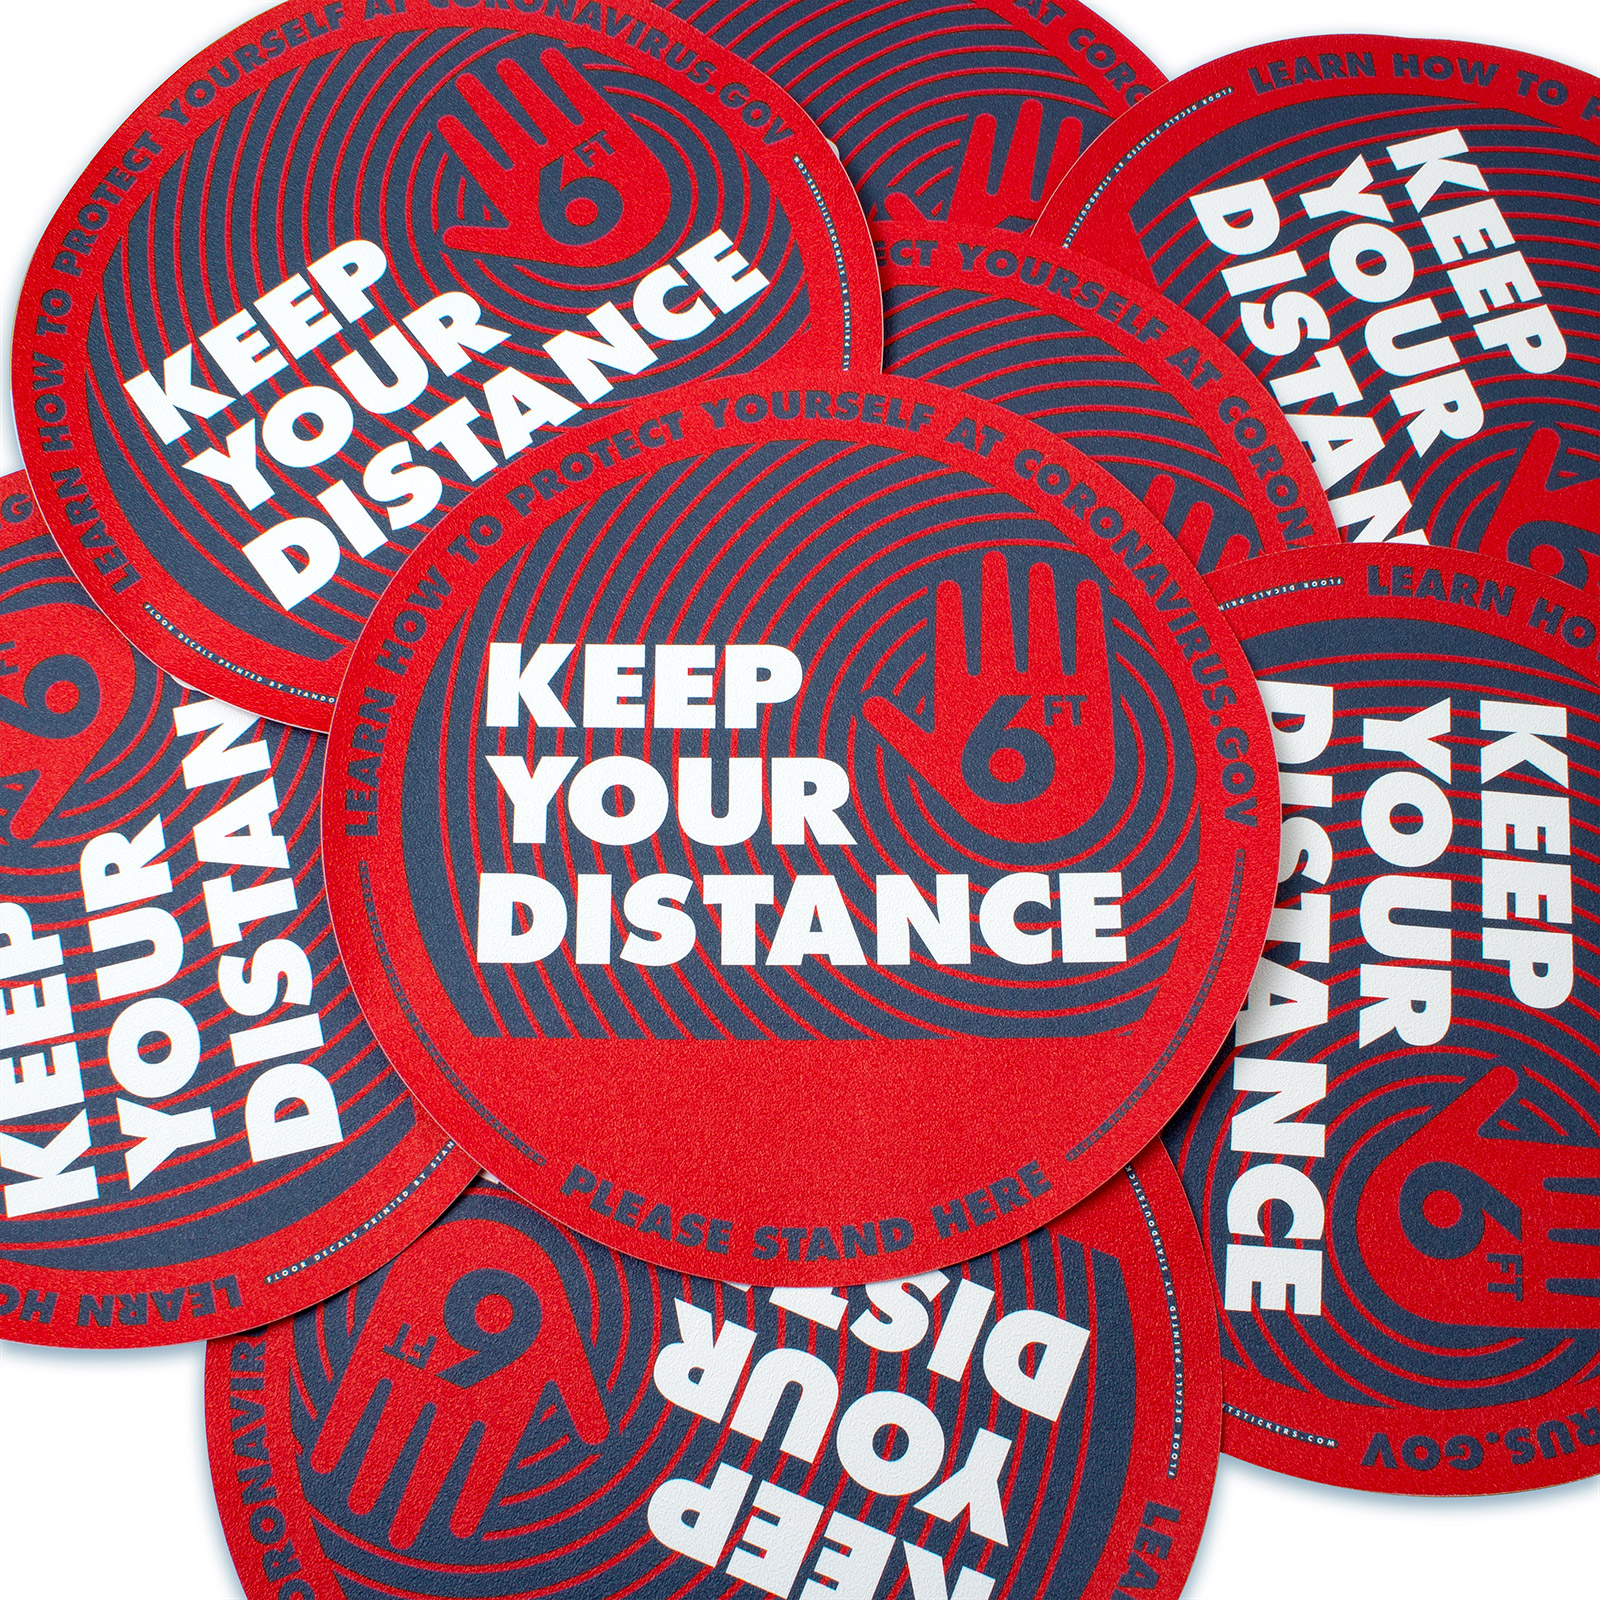 Keep Your Distance 6ft Coronavirus Floor Decal